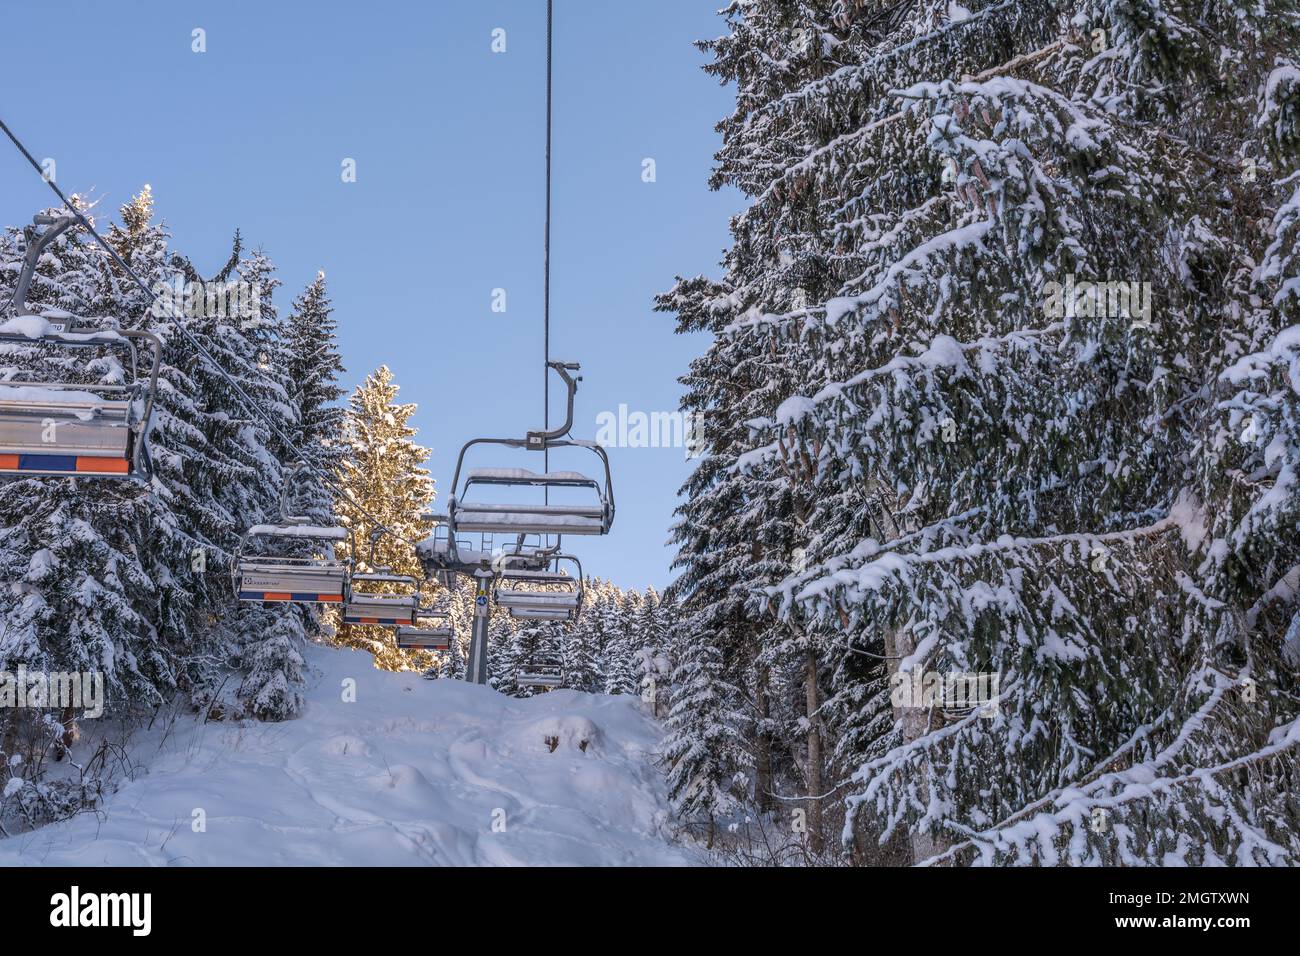 modern ski lifts - monocable circulating ropeway - Andalo village, Adamello Brenta Natural Park, Trentino Alto Adige, northern Italy, Europe - january Stock Photo